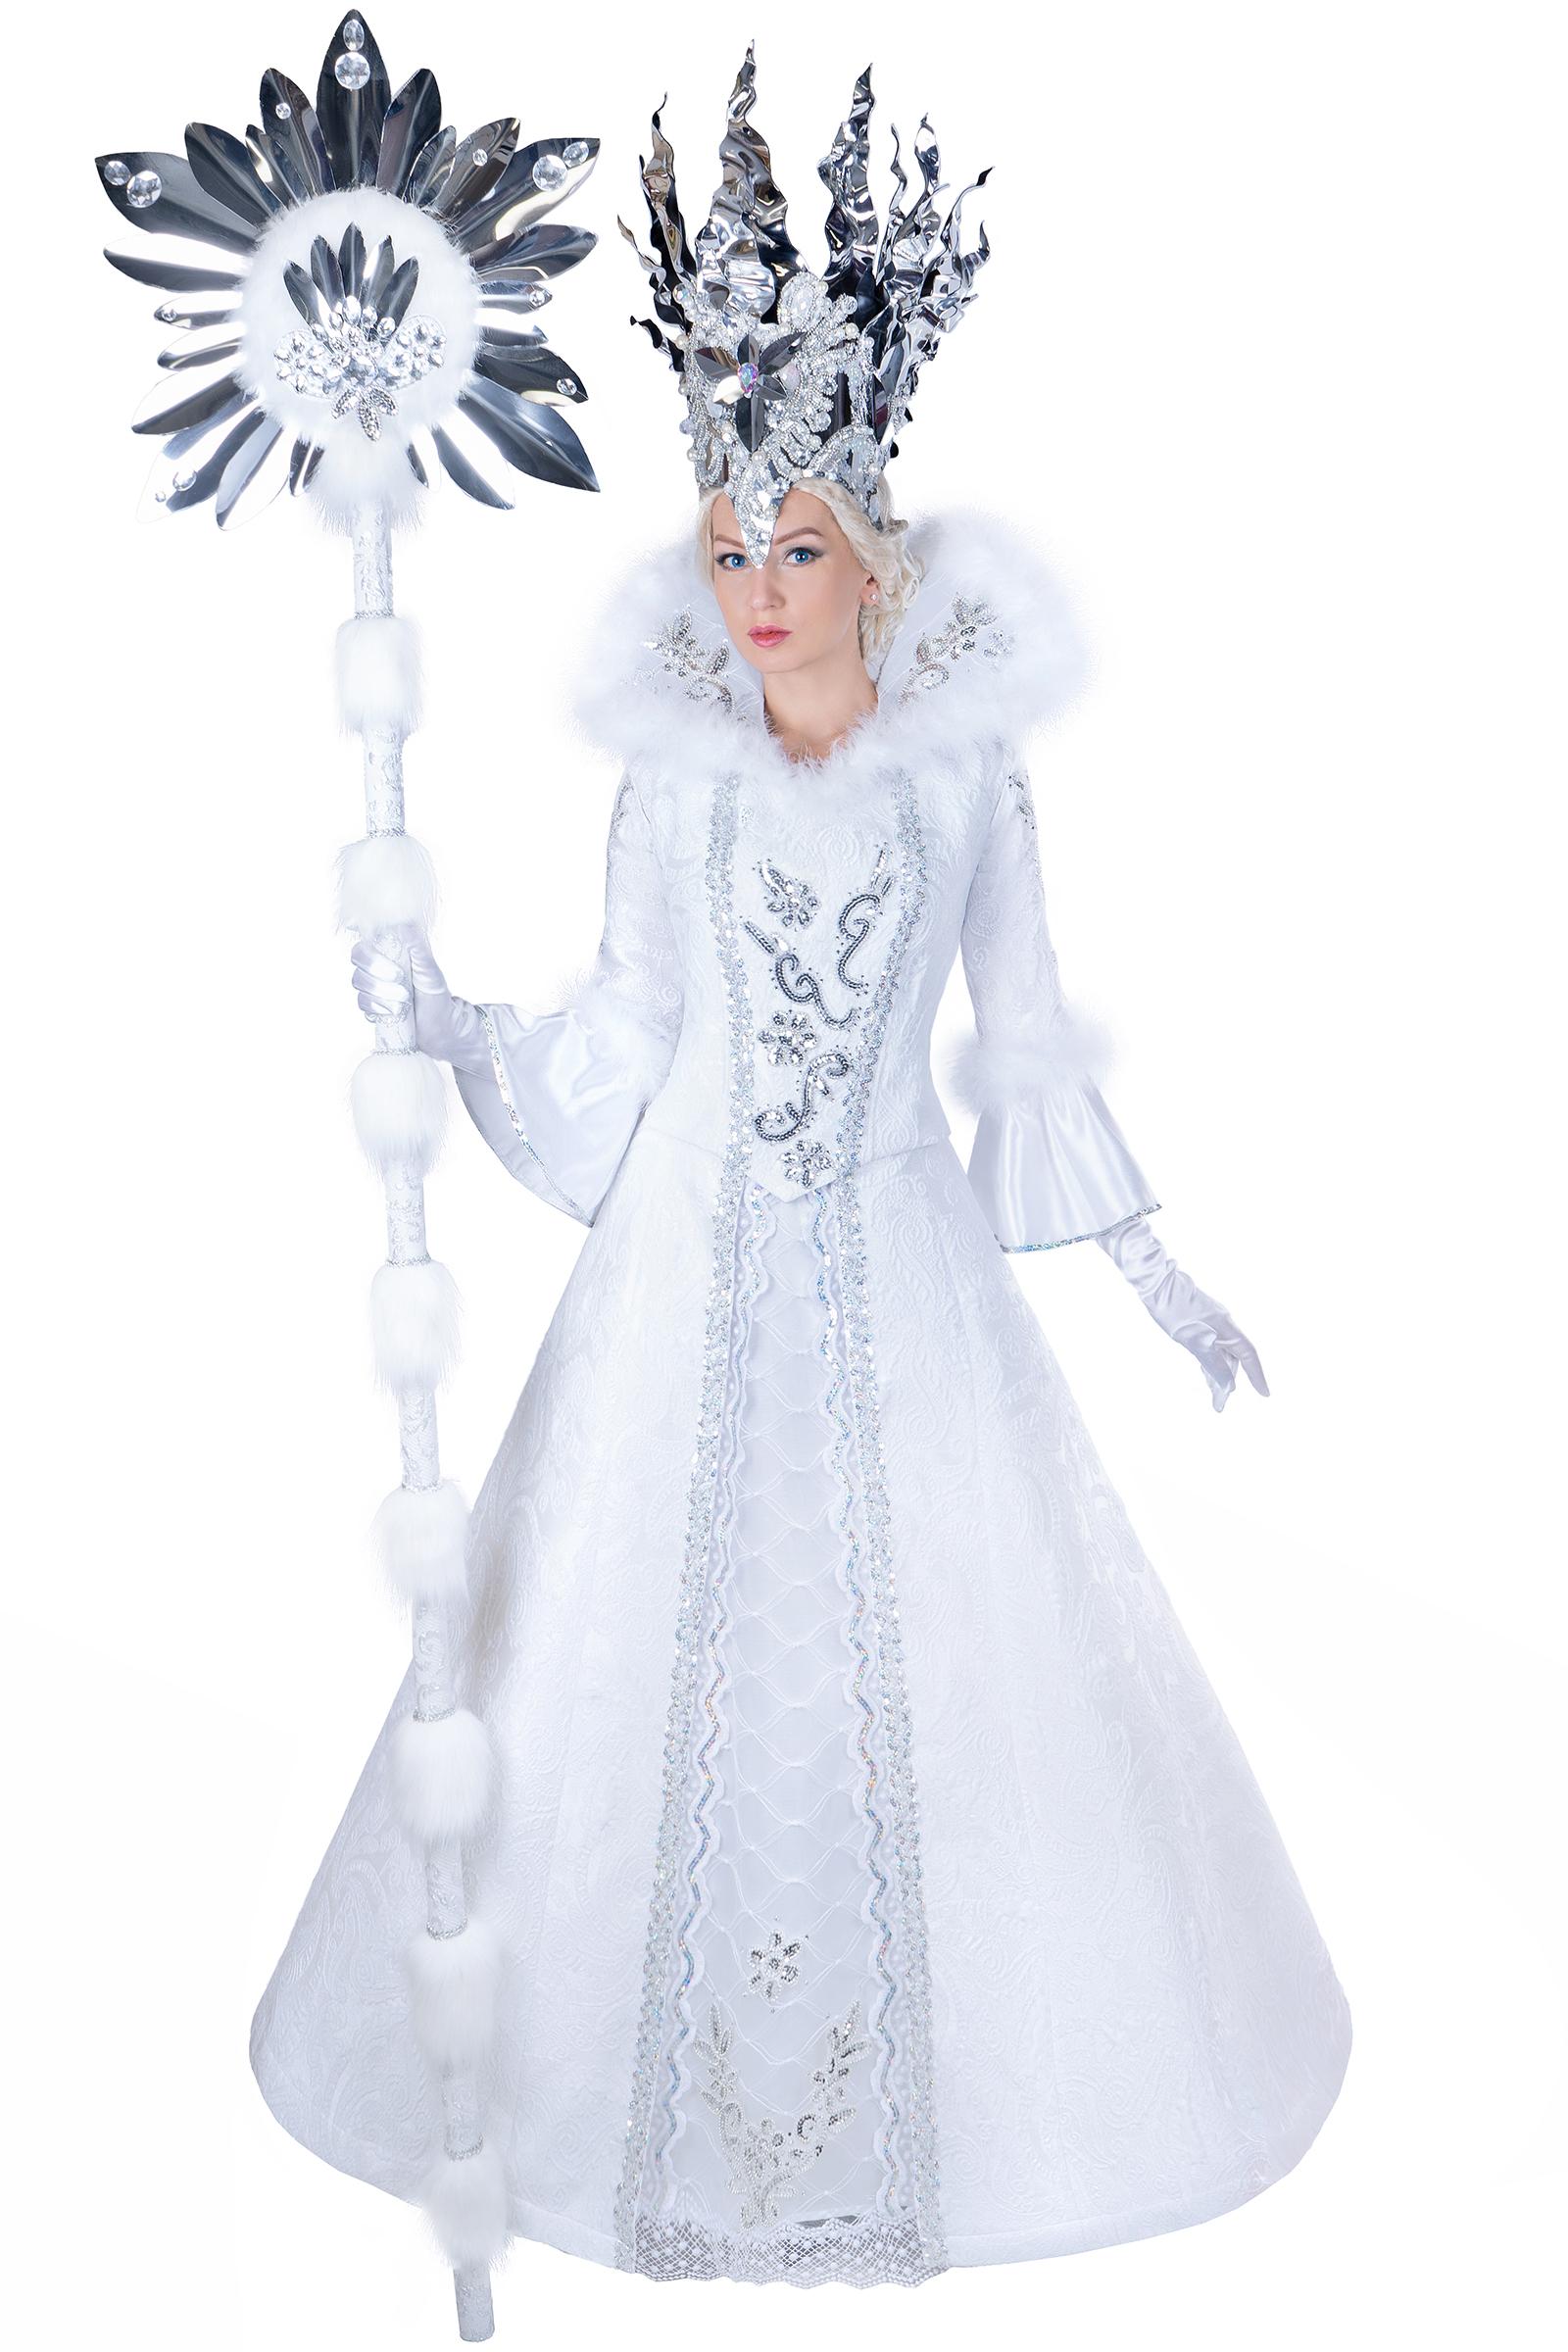 Снежная королева поделка своими руками - 86 фото